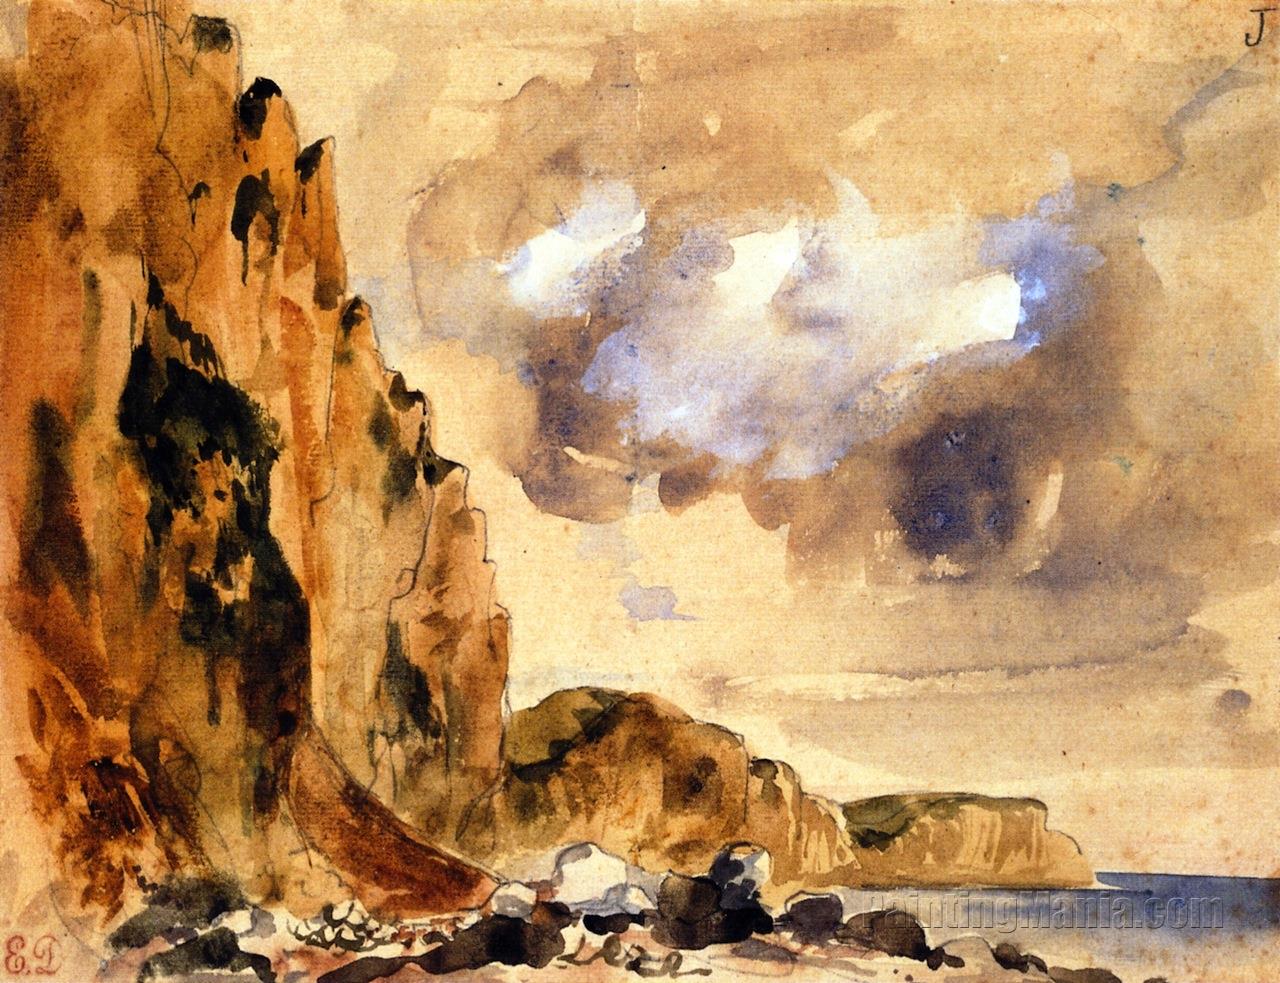 Cliffs in Normandy